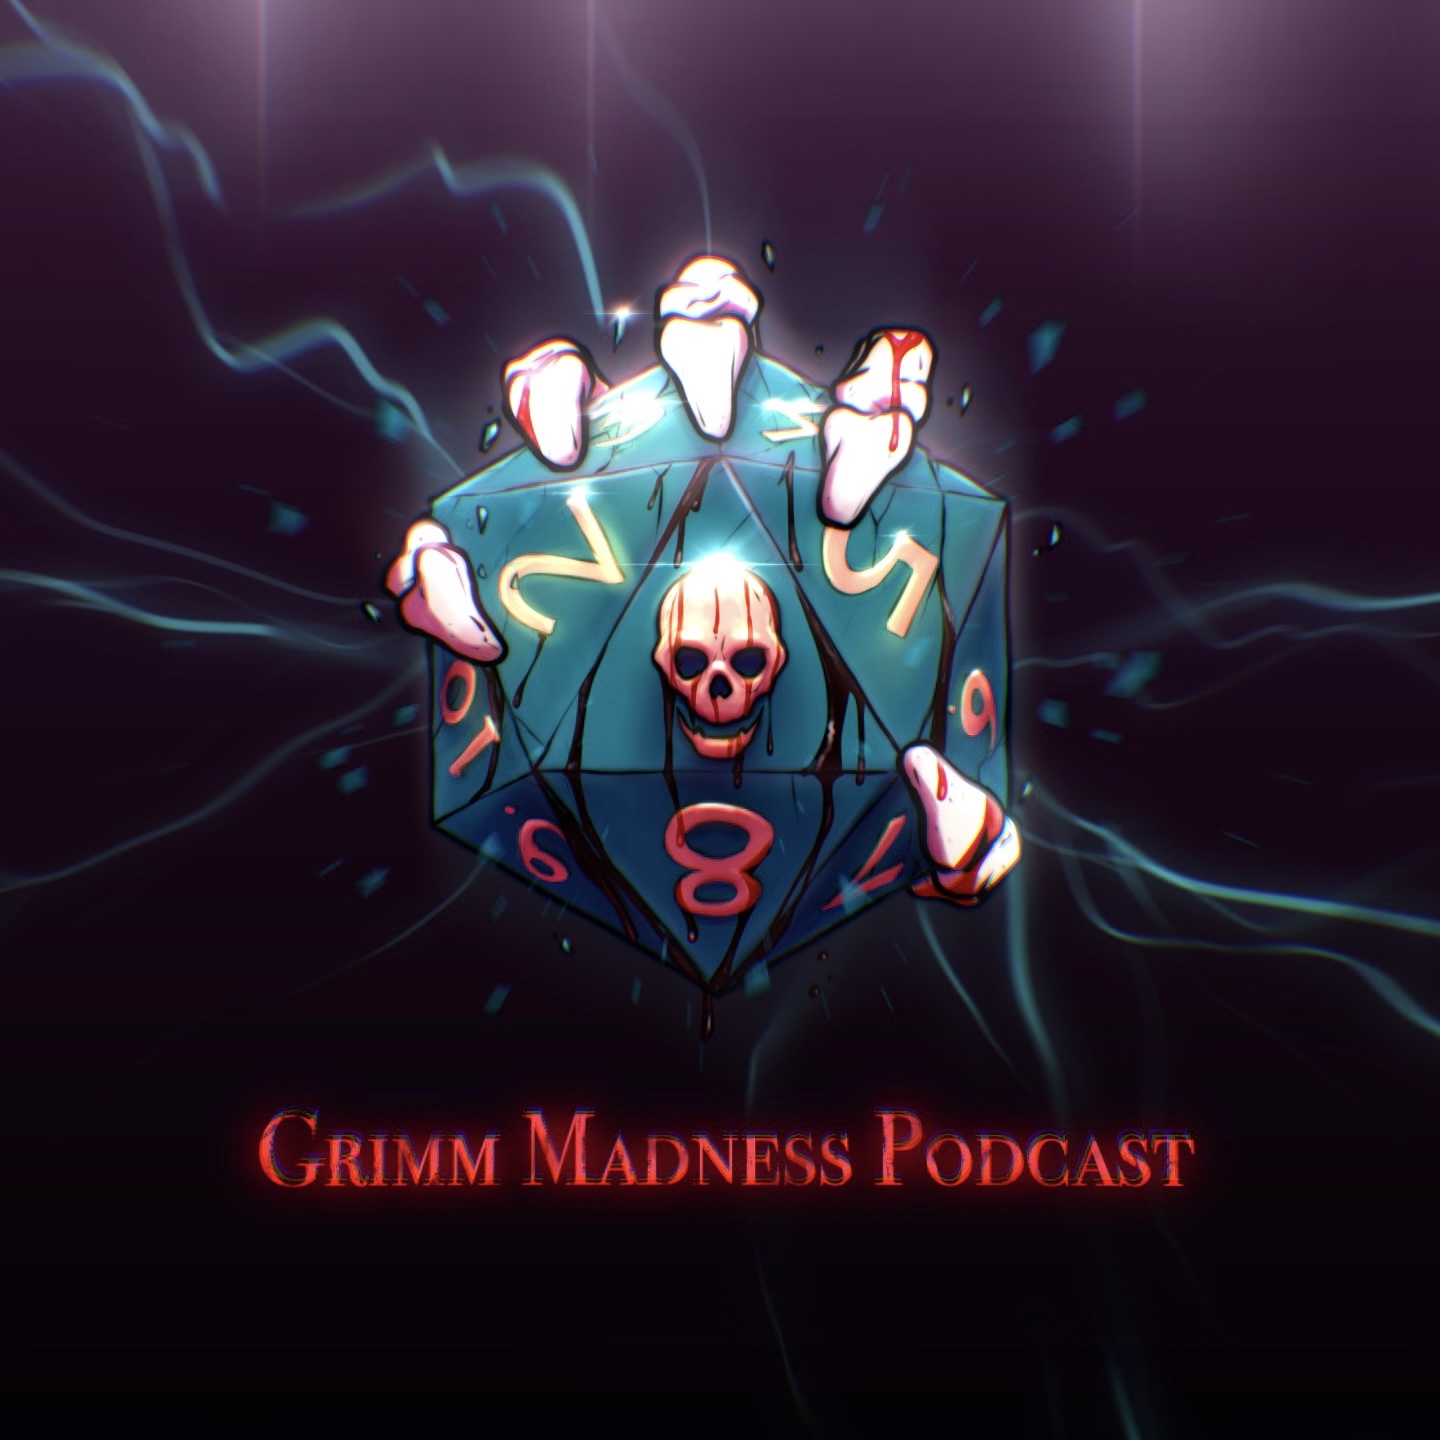 Artwork for Grimm Madness Podcast